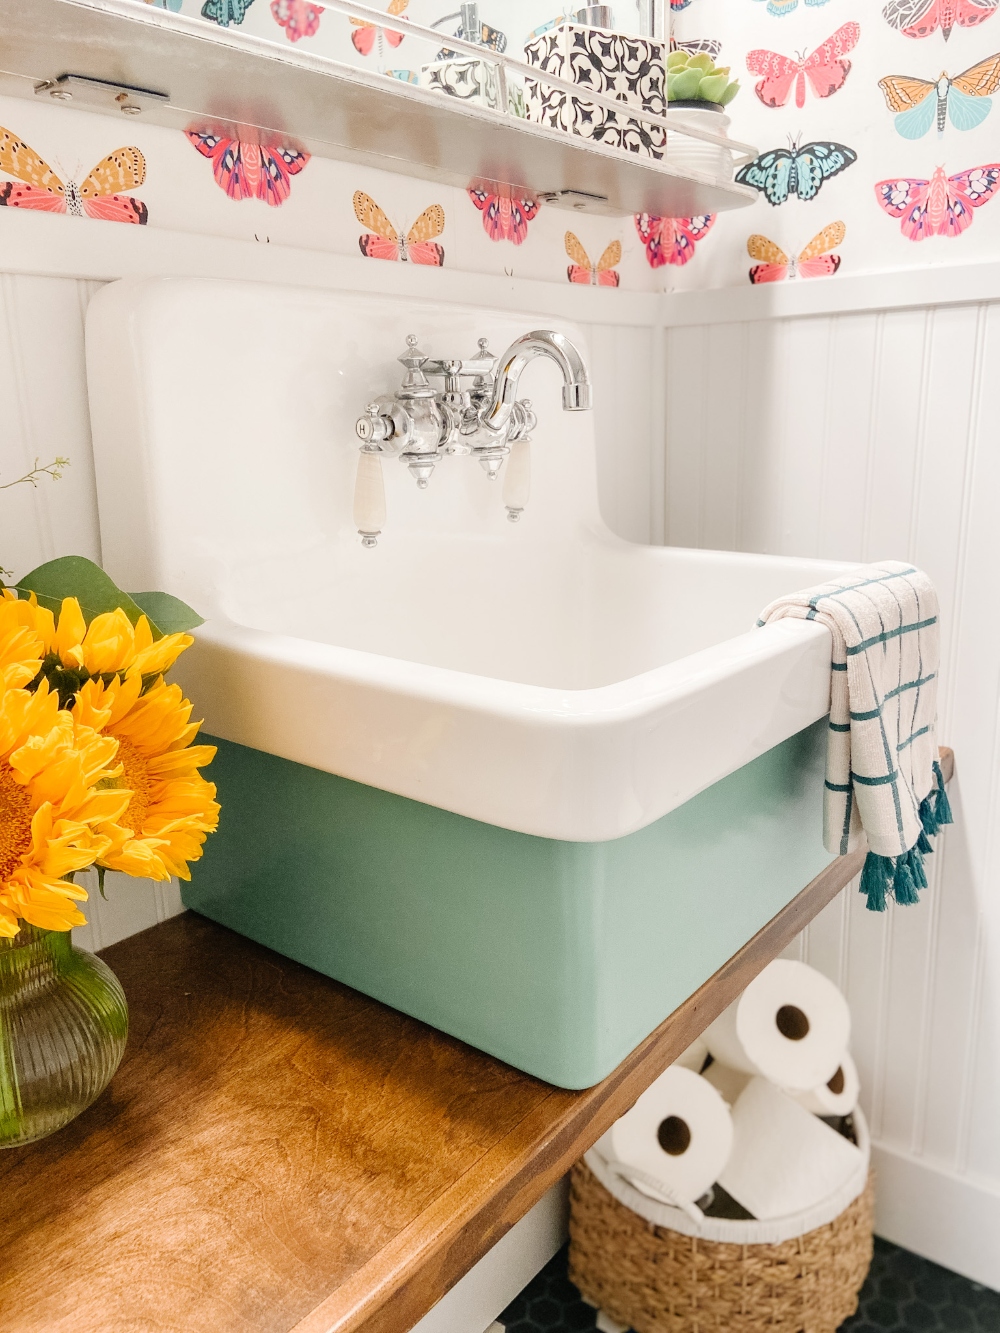 10 Ways to Make a Tiny Half Bath Seem Bigger. Tips and tricks to make a tiny bathroom seem spacious and memorable! 